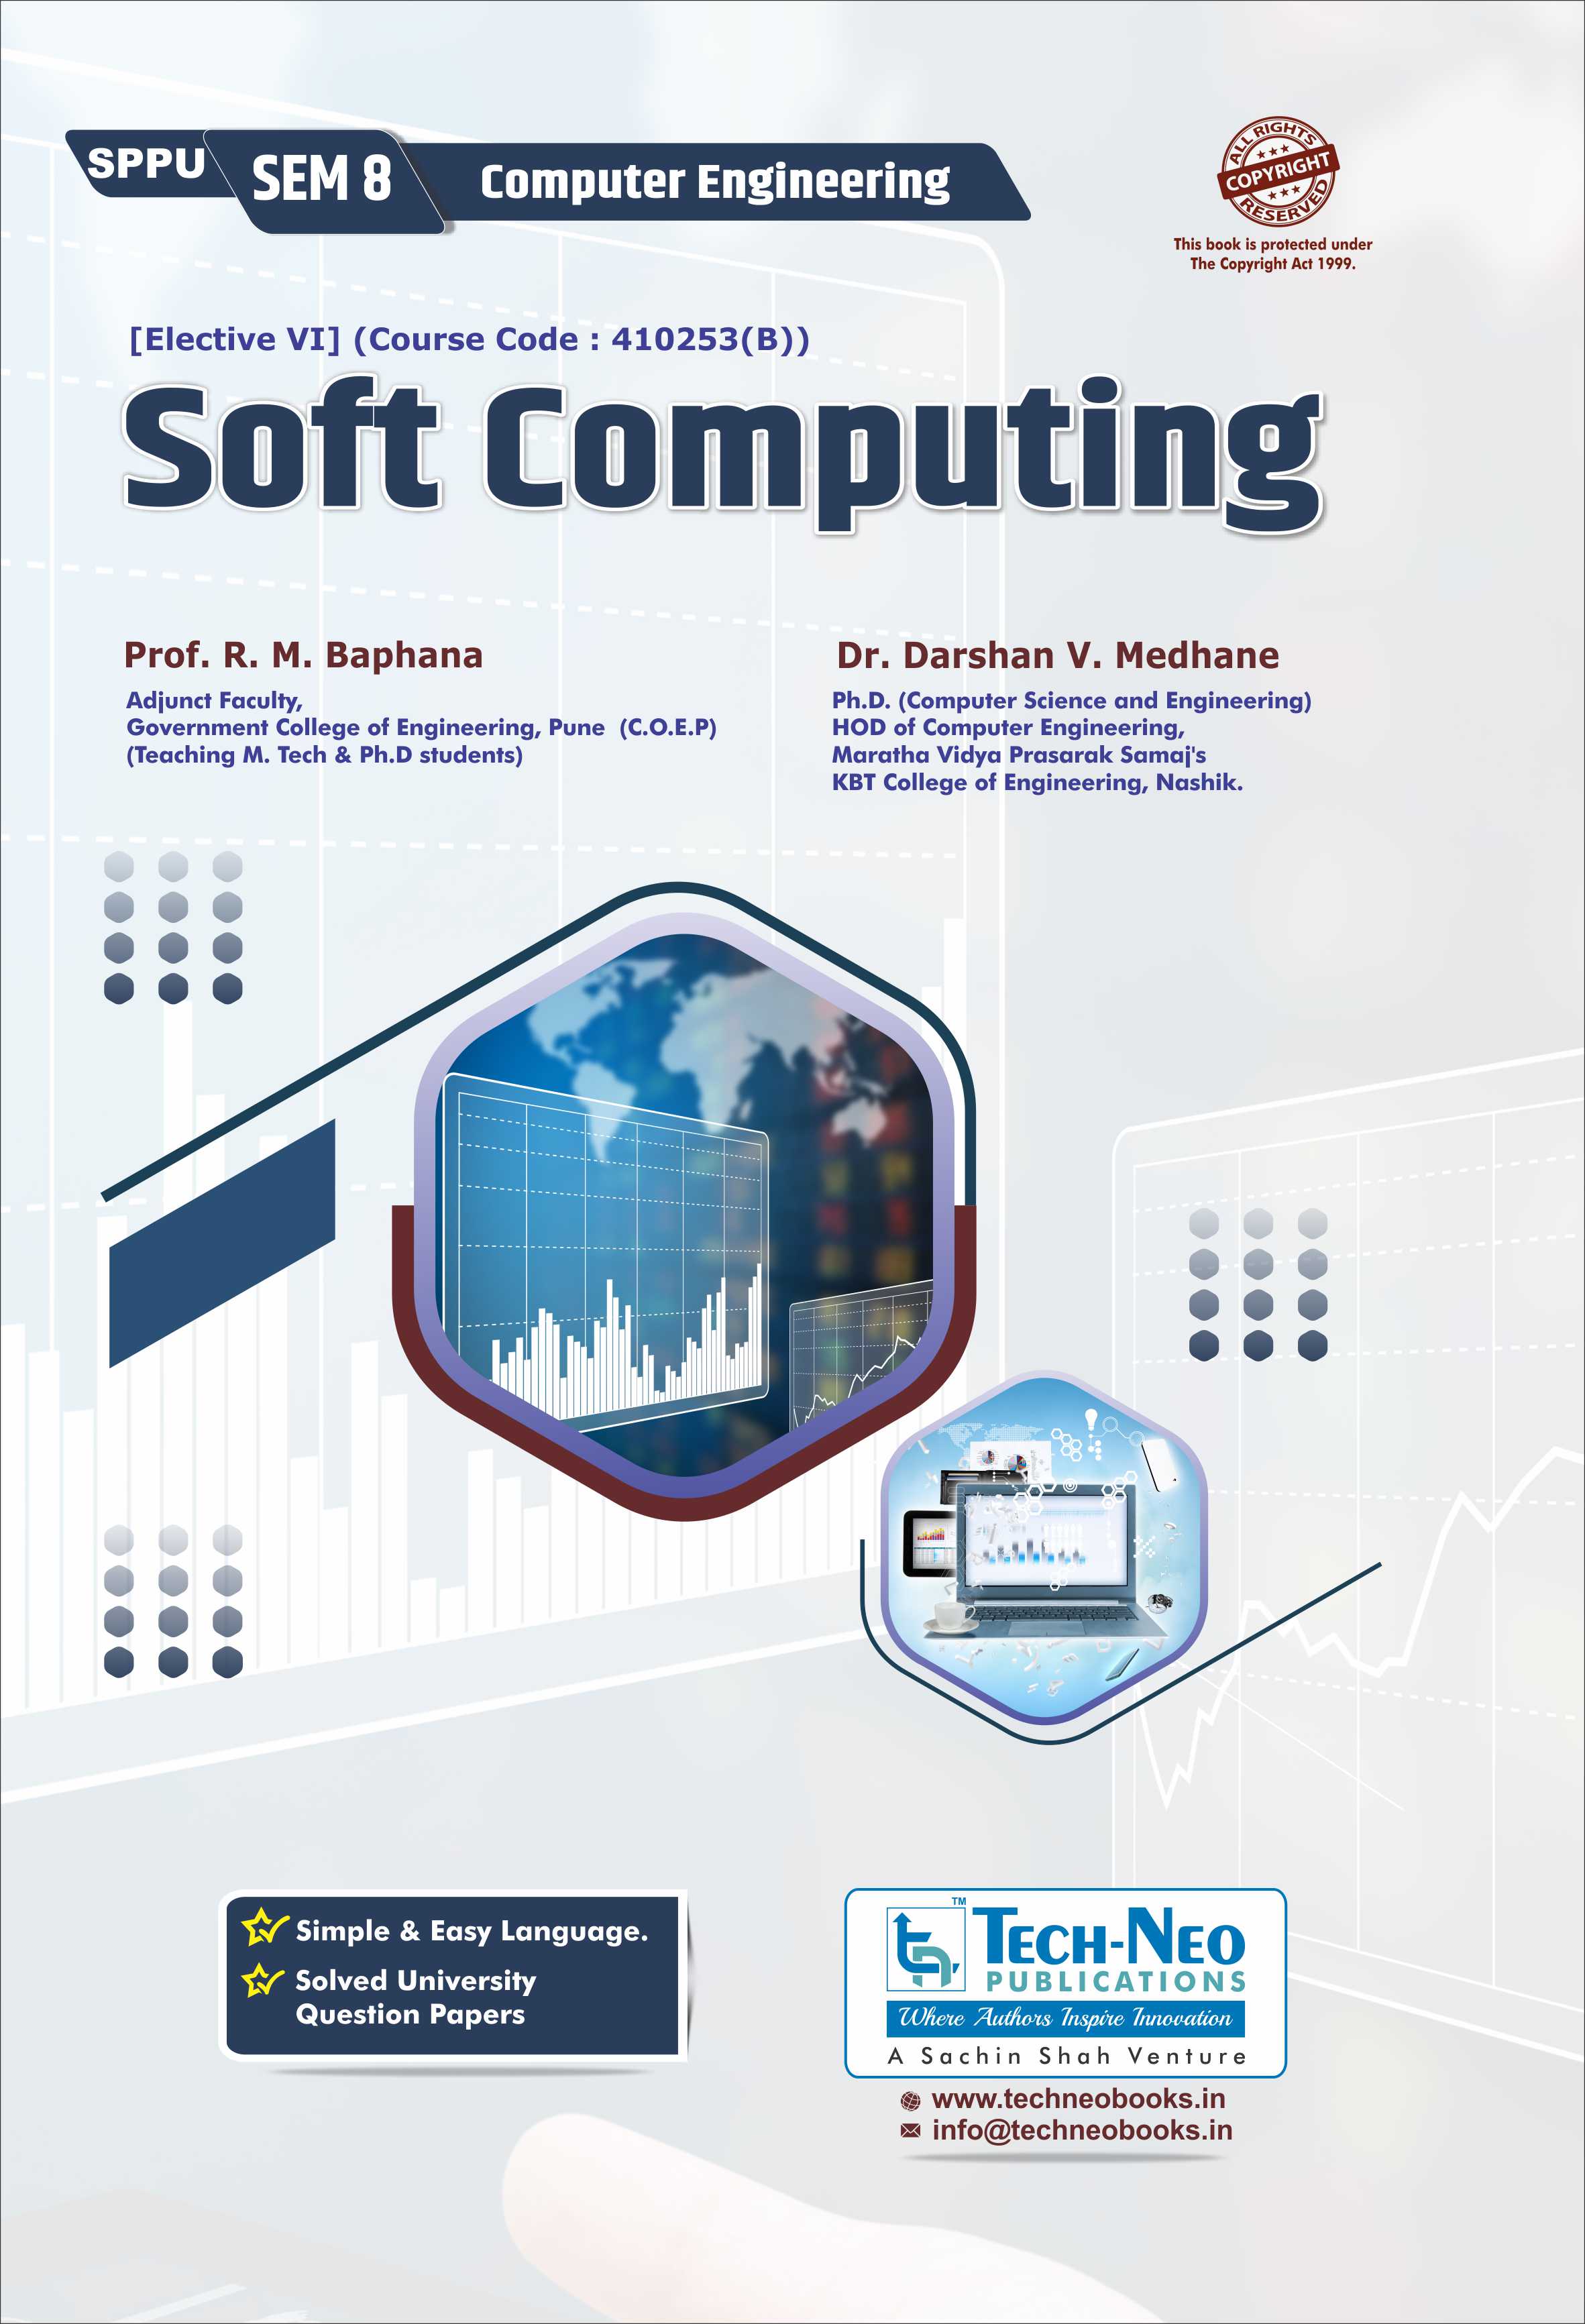 Soft Computing